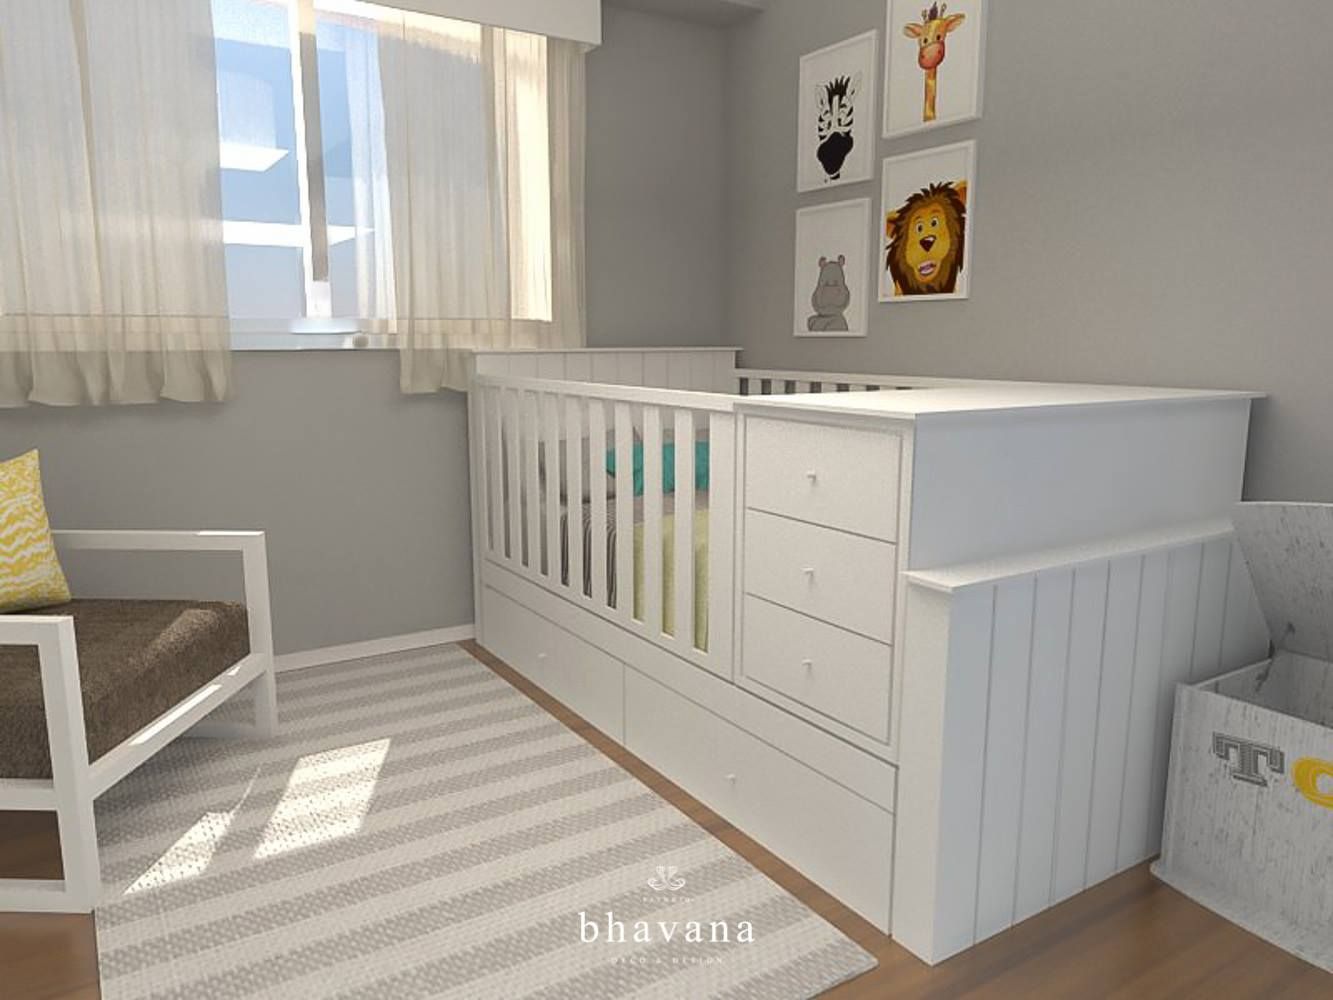 Obra Blanco Encalada - Diseño Habitación Infantil, Bhavana Bhavana Modern nursery/kids room